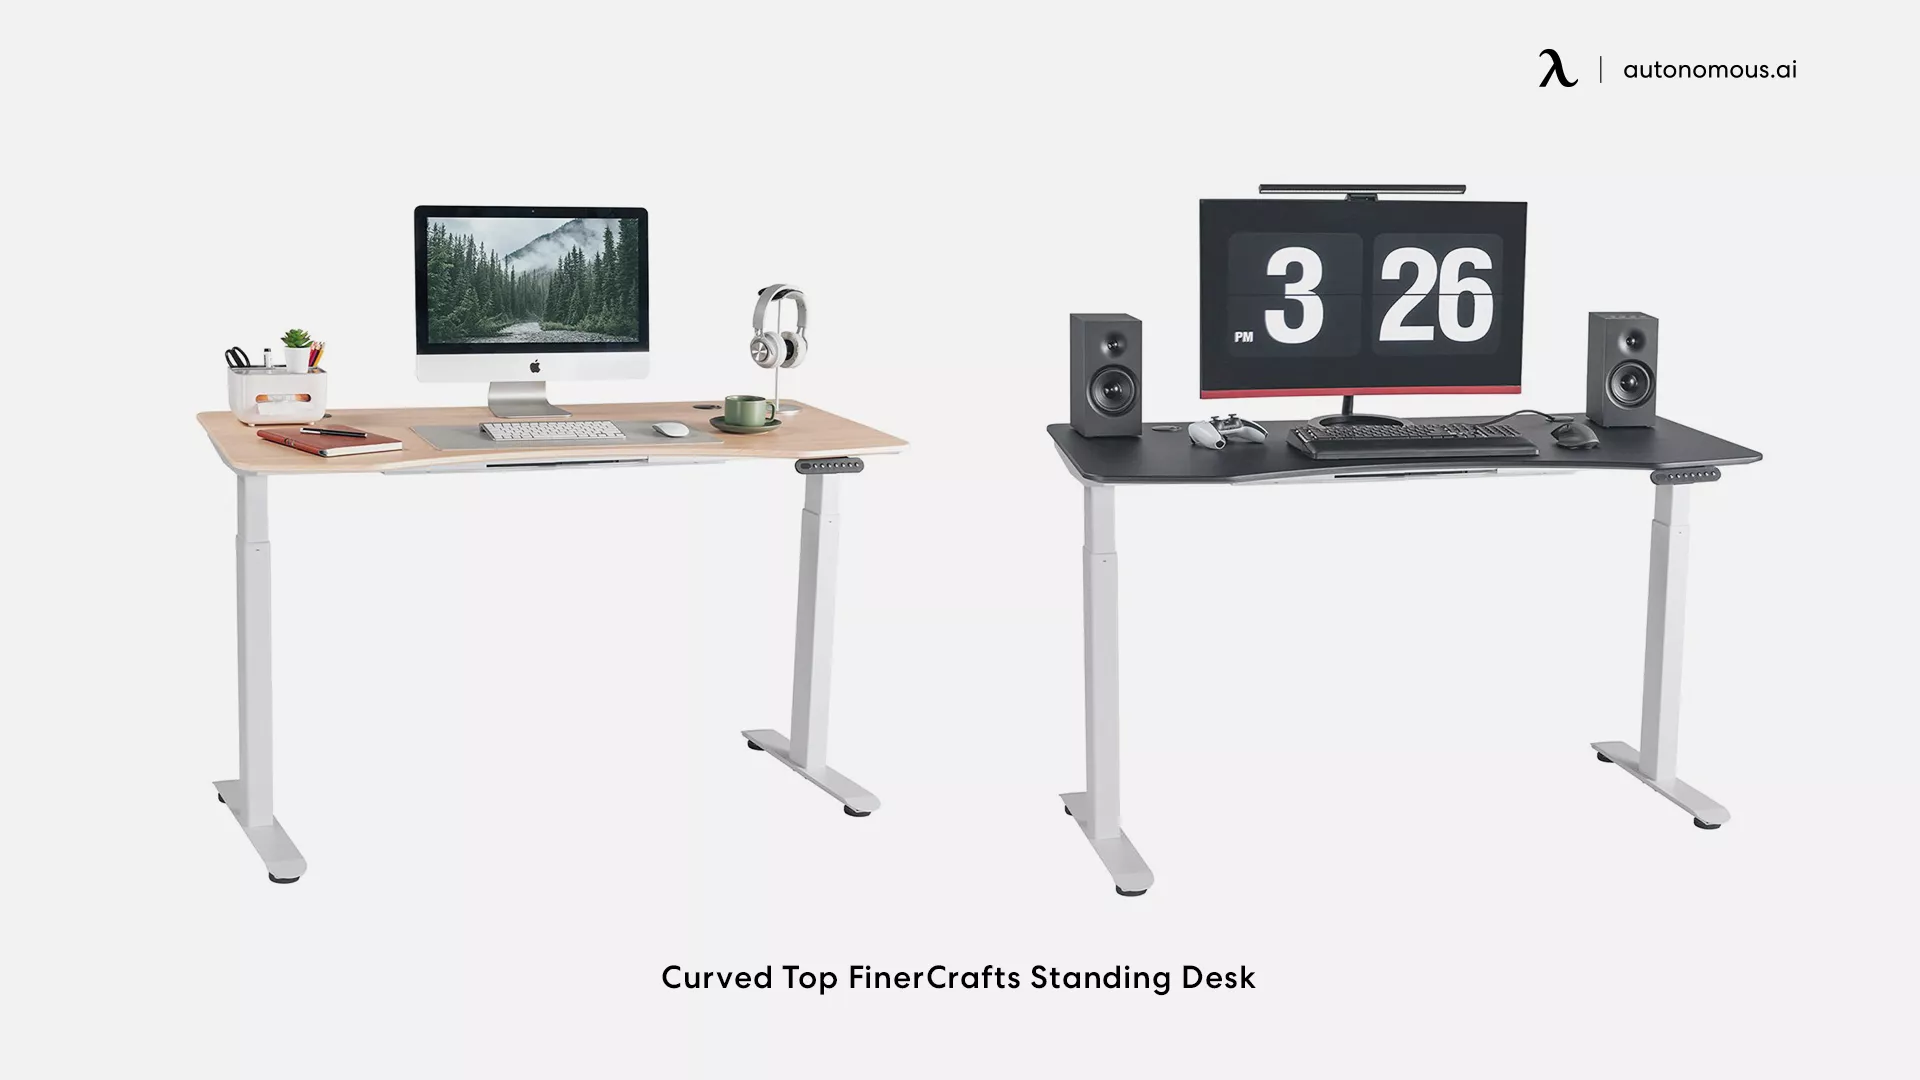 Curved Top FinerCrafts Standing Desk